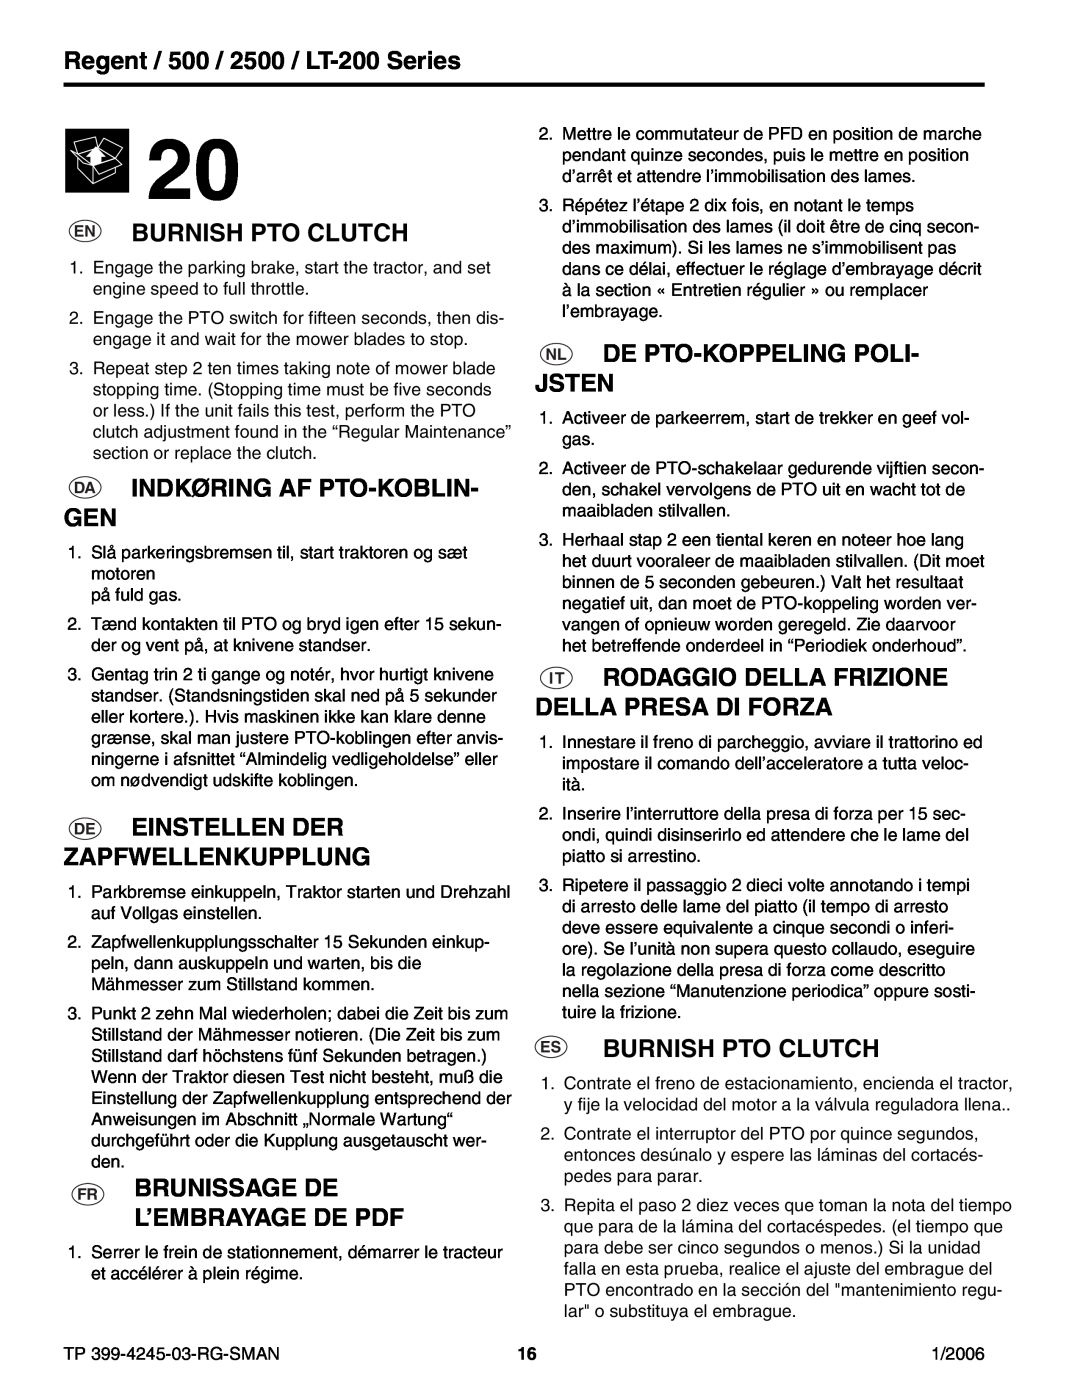 Simplicity 2500, LT-200 manual En Burnish Pto Clutch, Da Indkøring Af Pto-Koblin-Gen, De Einstellen Der Zapfwellenkupplung 